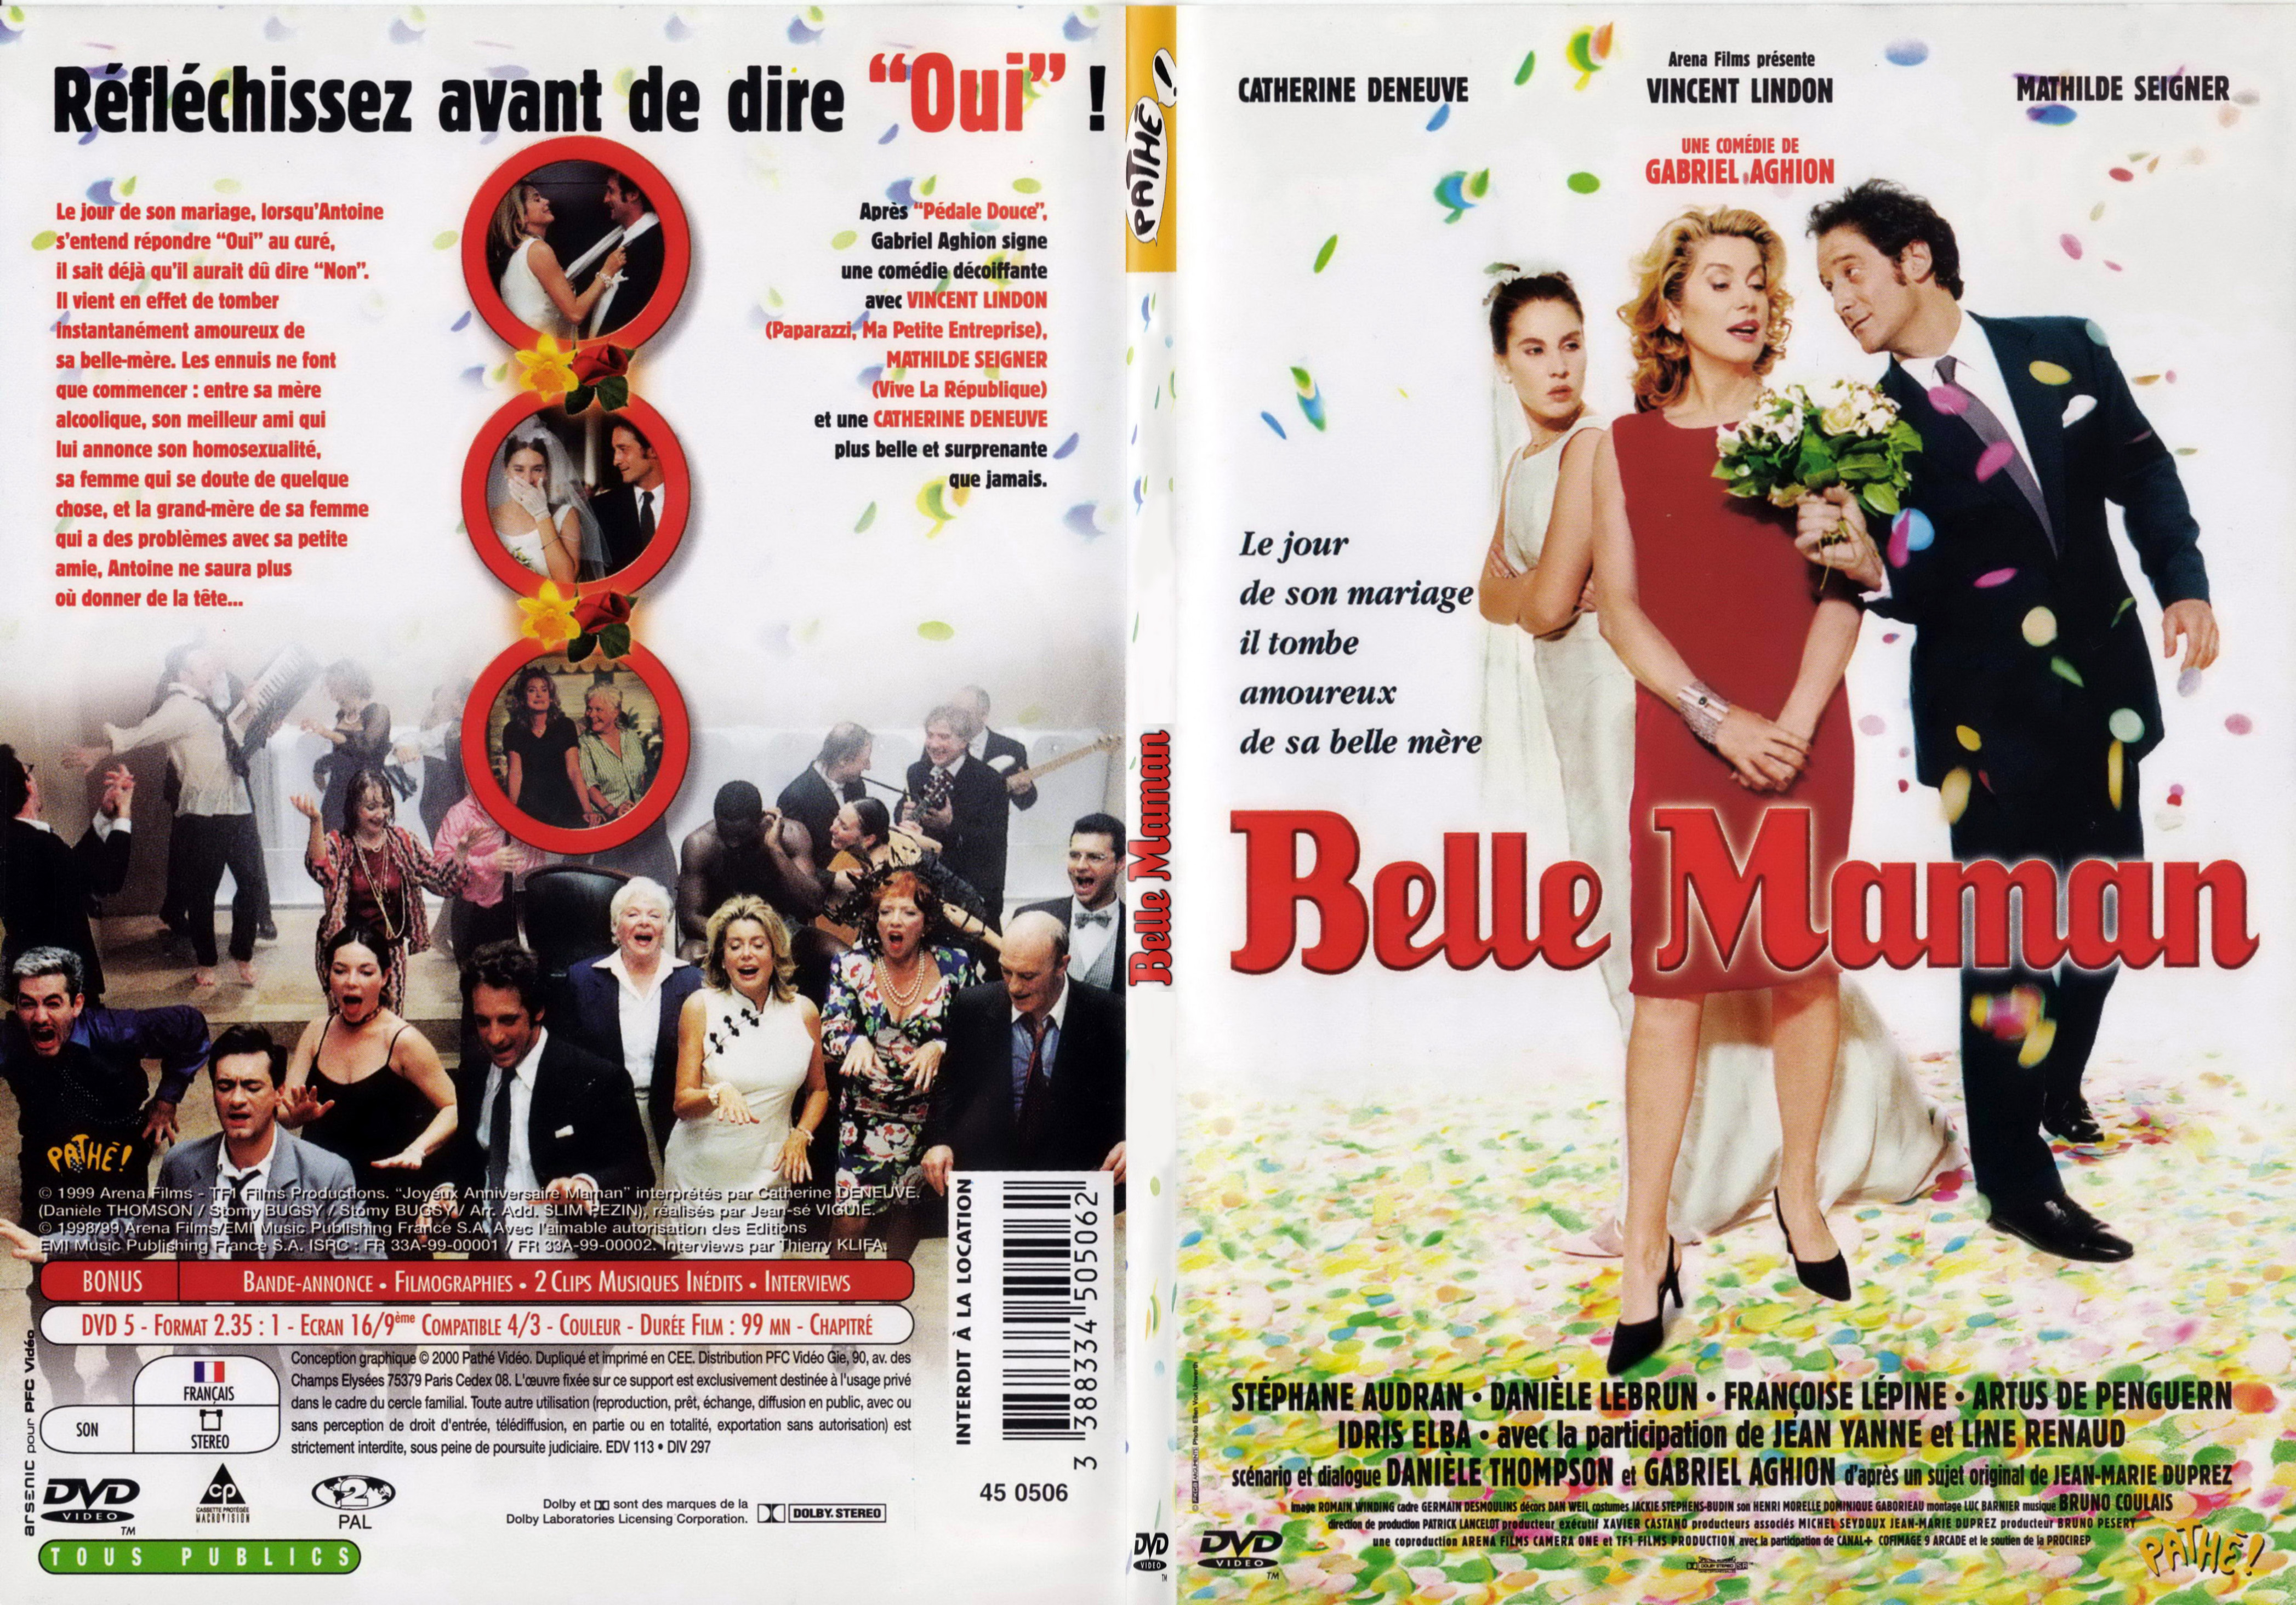 Jaquette DVD Belle maman - SLIM